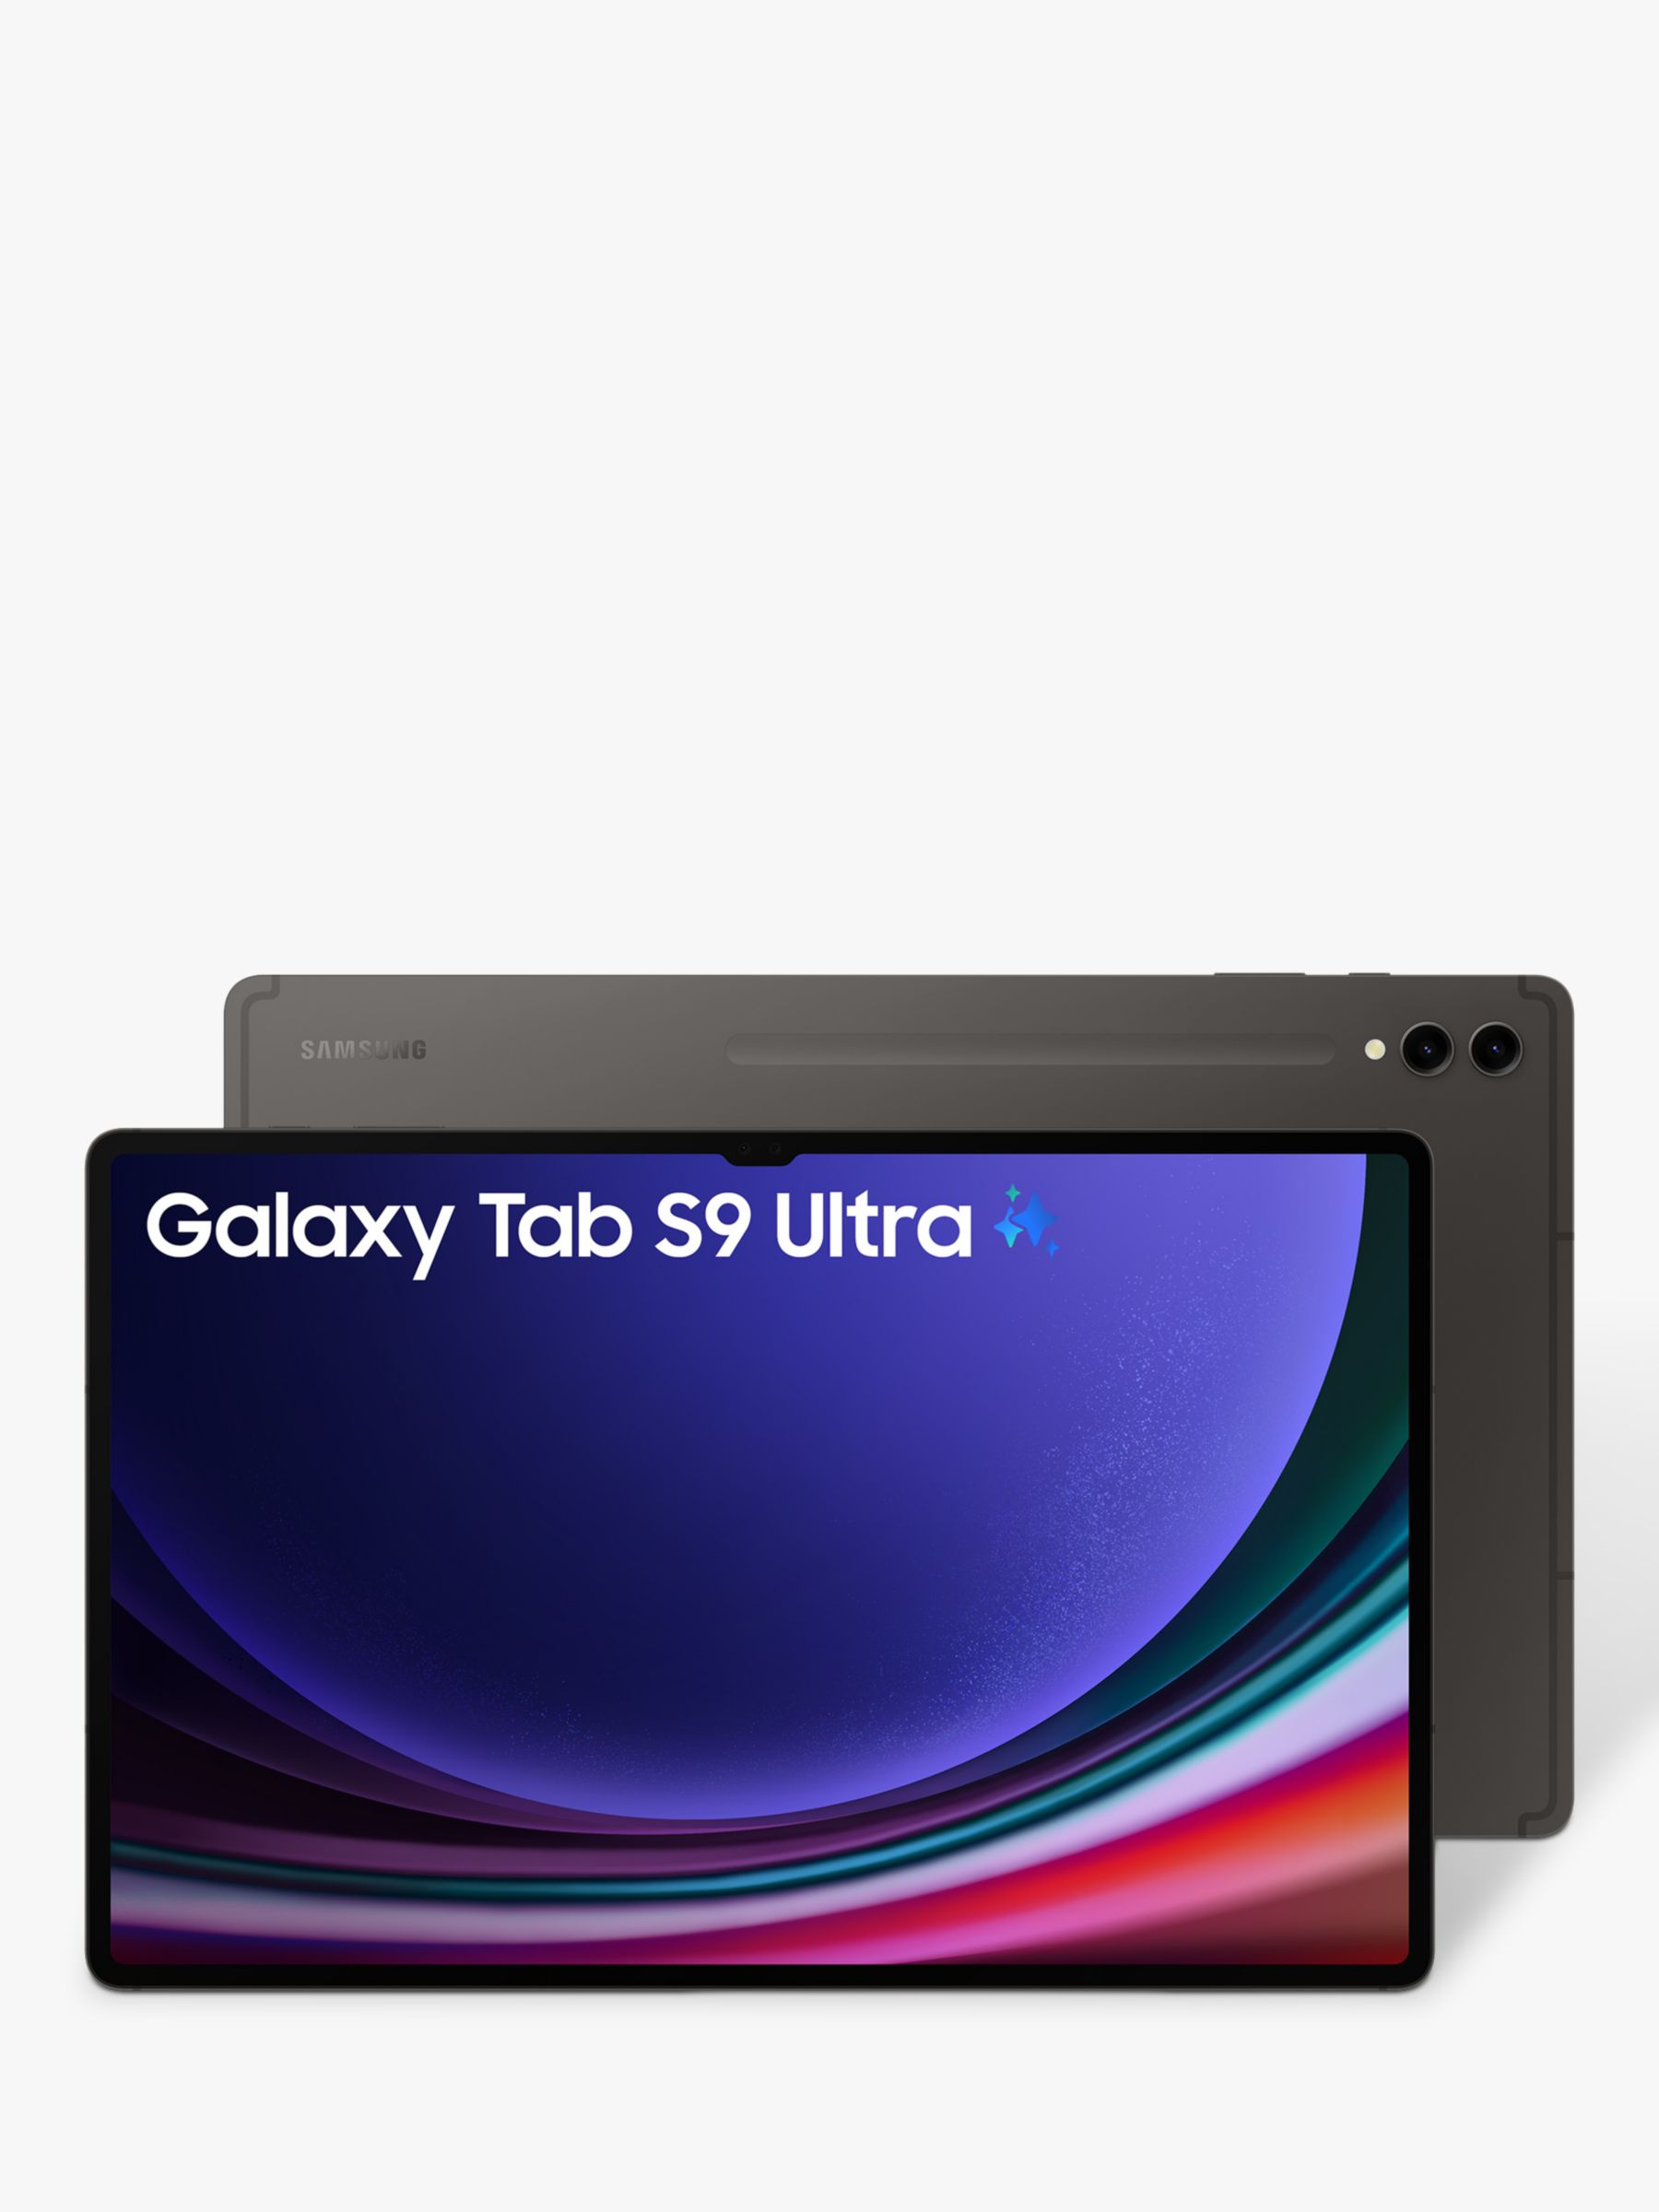 Samsung Galaxy Tab S9 Ultra -  External Reviews